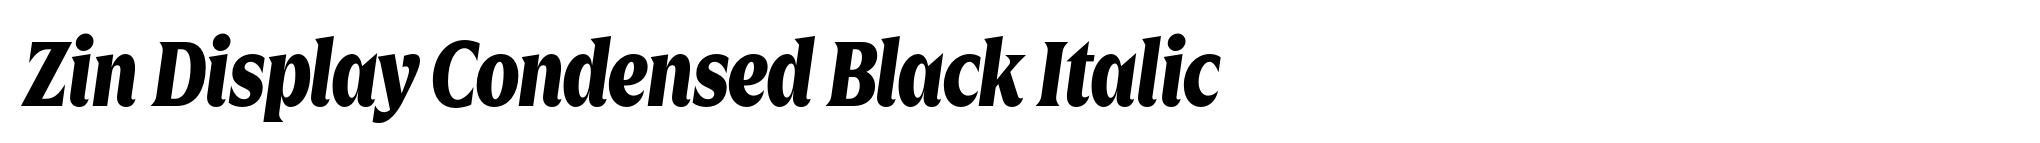 Zin Display Condensed Black Italic image